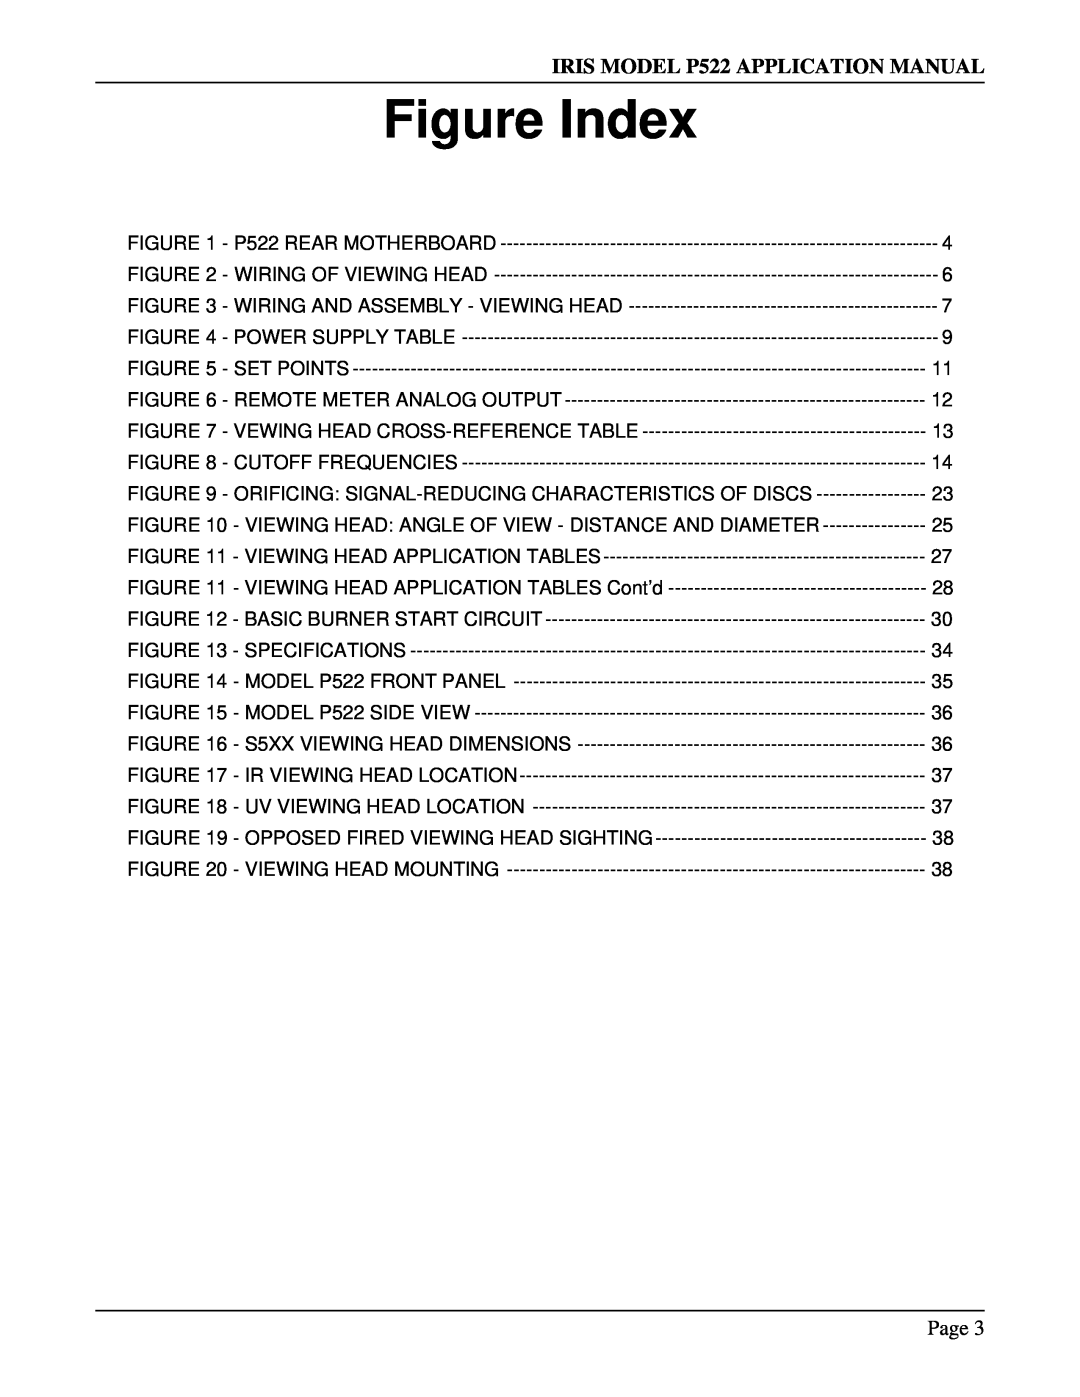 IRIS manual Figure Index, IRIS MODEL P522 APPLICATION MANUAL 